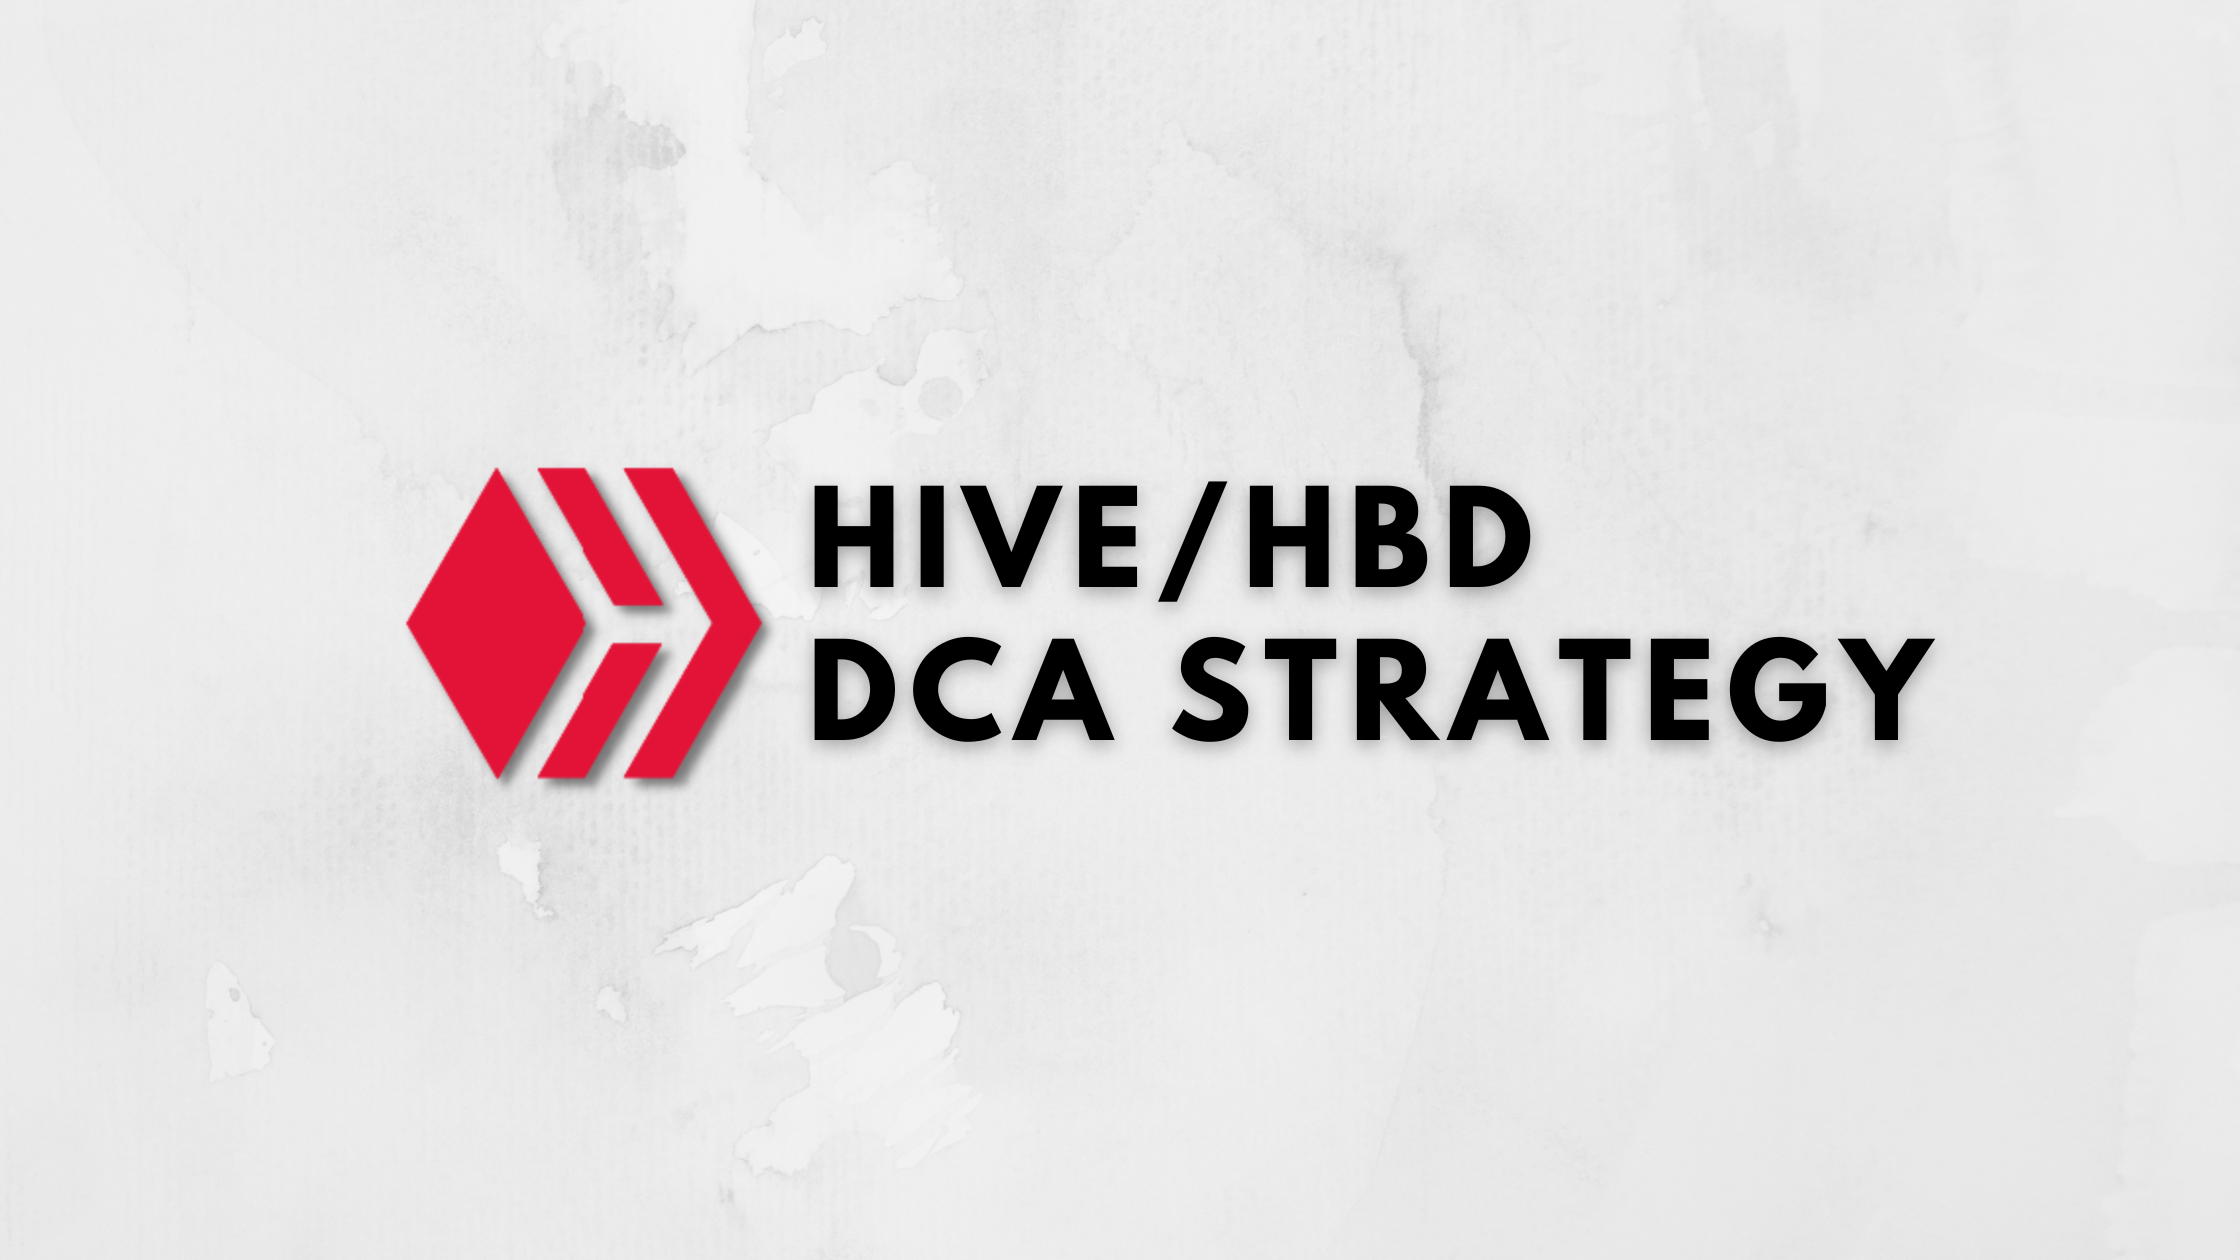 @brando28/hive-hbd-dca-strategy